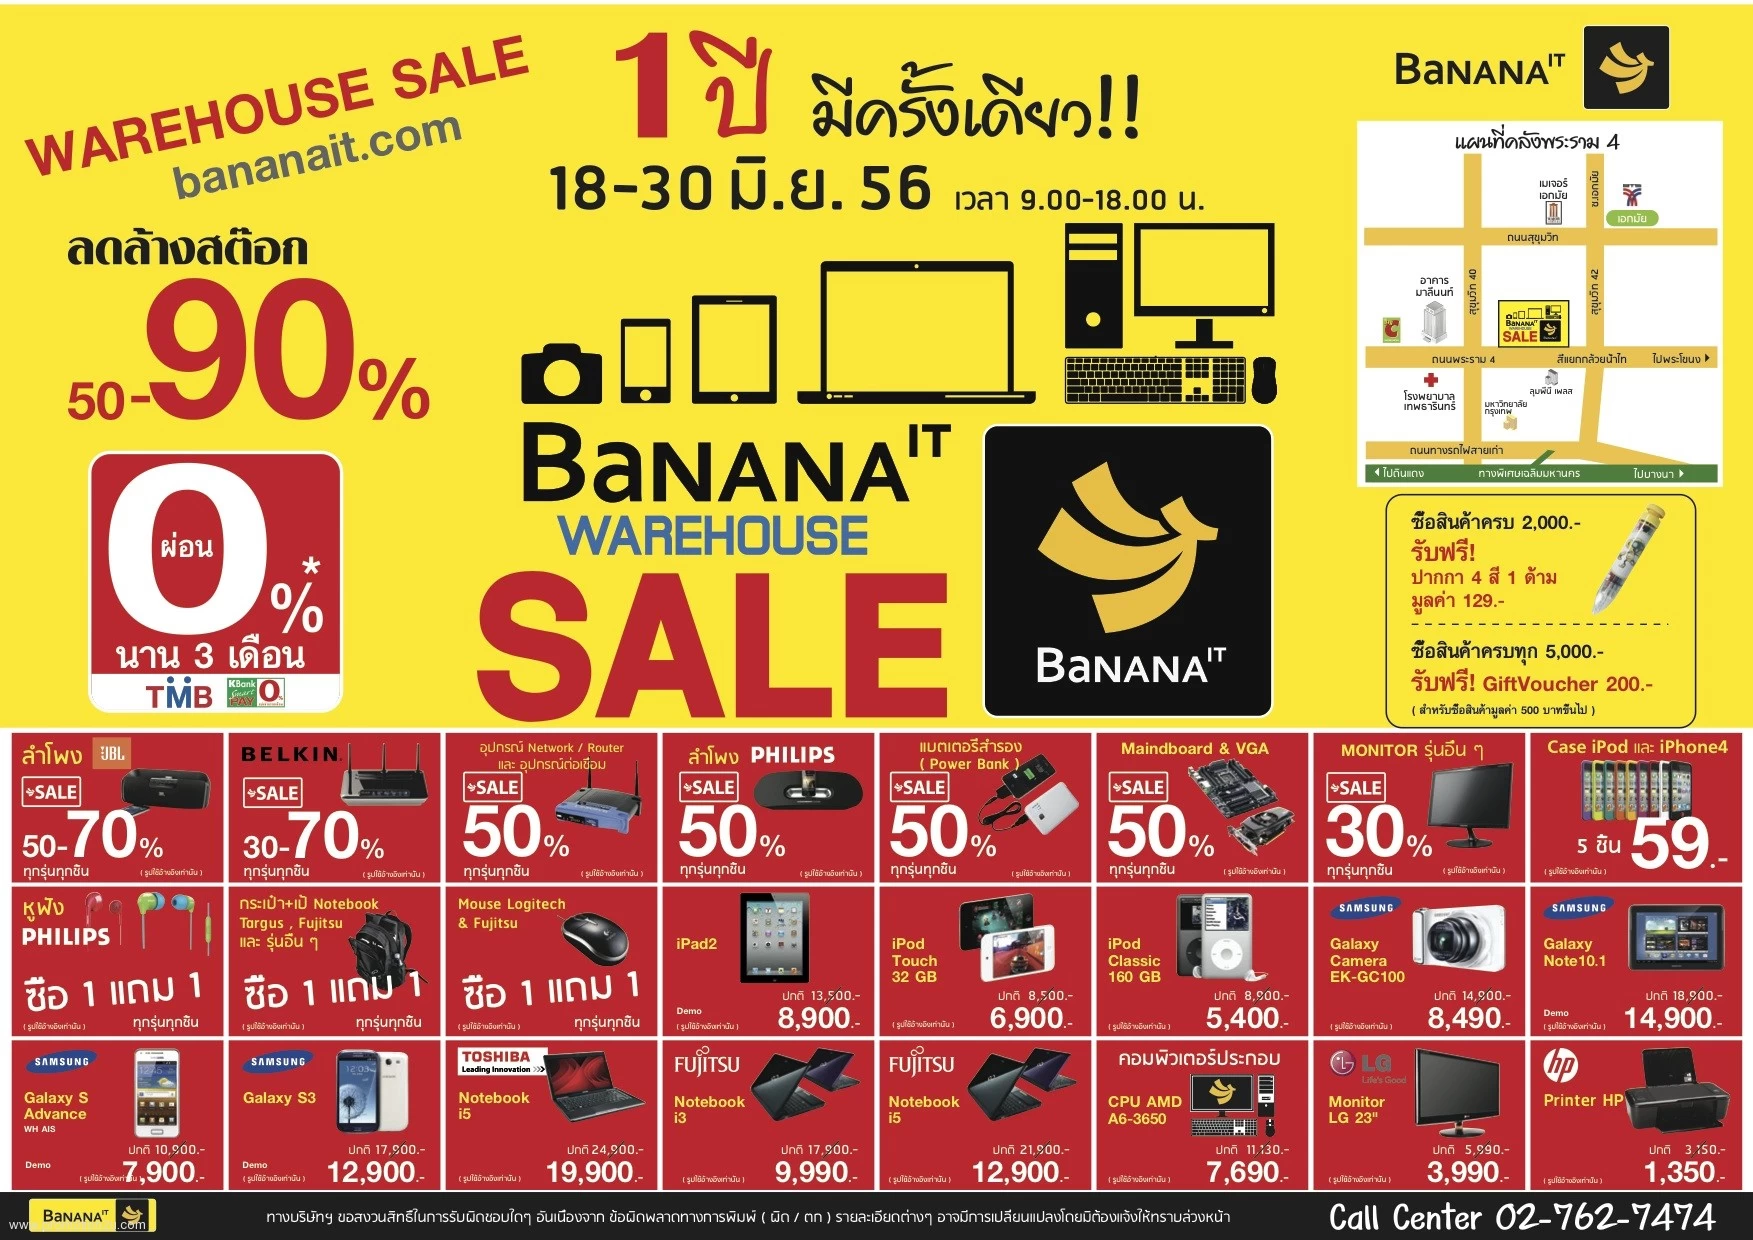 brochure promotion banana it warehouse sale up to 90 off jun 2013 full | banana | <!--:TH--></noscript>Promotion จากงาน Banana IT ตั้งแต่ 18-30 มิ.ย.วันนี้เป็นวันแรกกกก ลดกระจุย